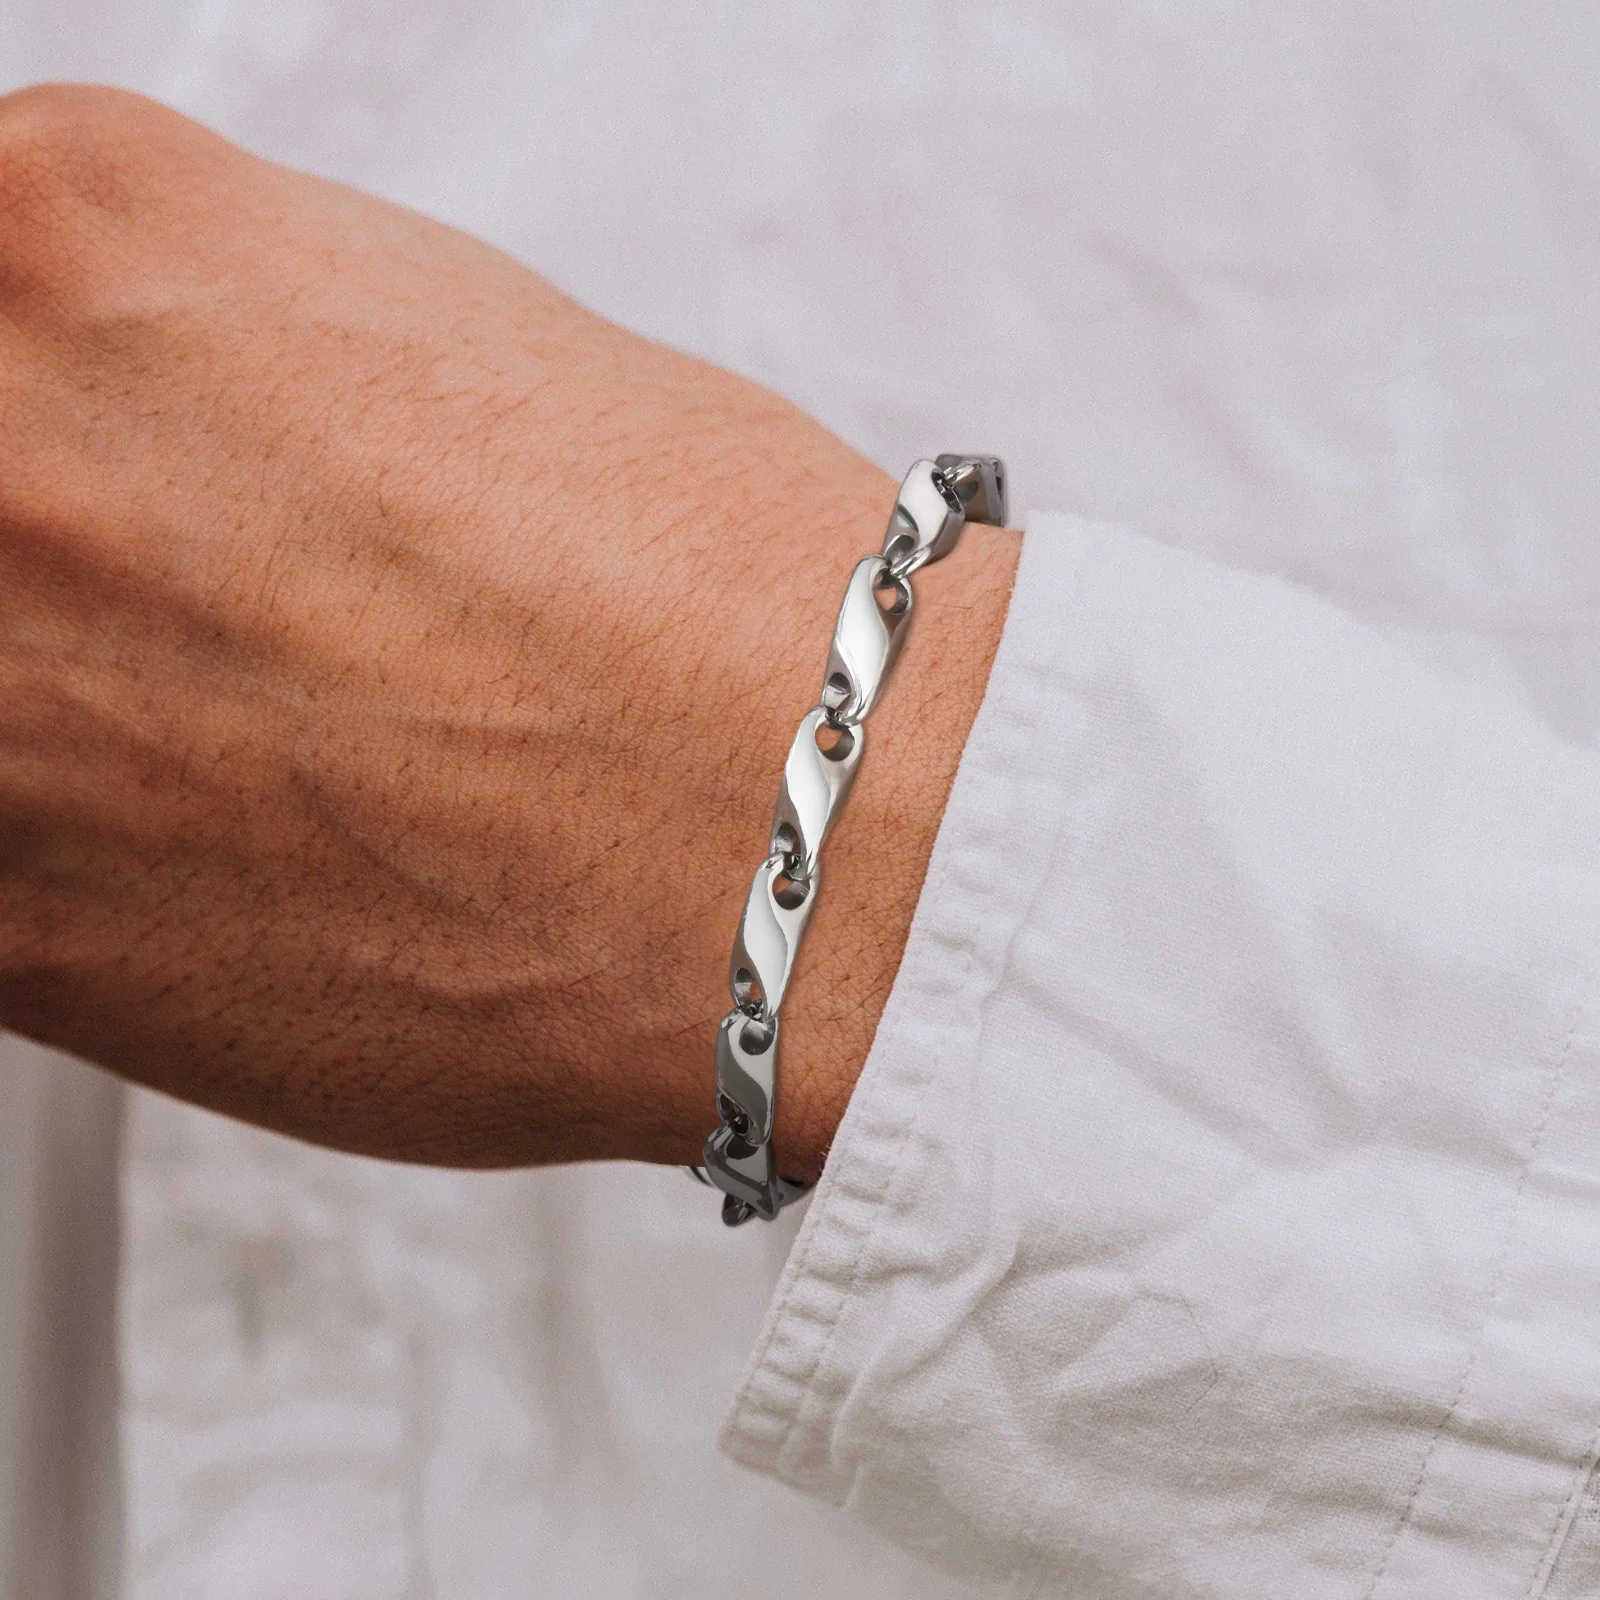 Vnox 6.4mm Stainless Steel Link Chain Bracelets for Men Women, New Fashion Casual Wristband Bracelet Gift Jewelry